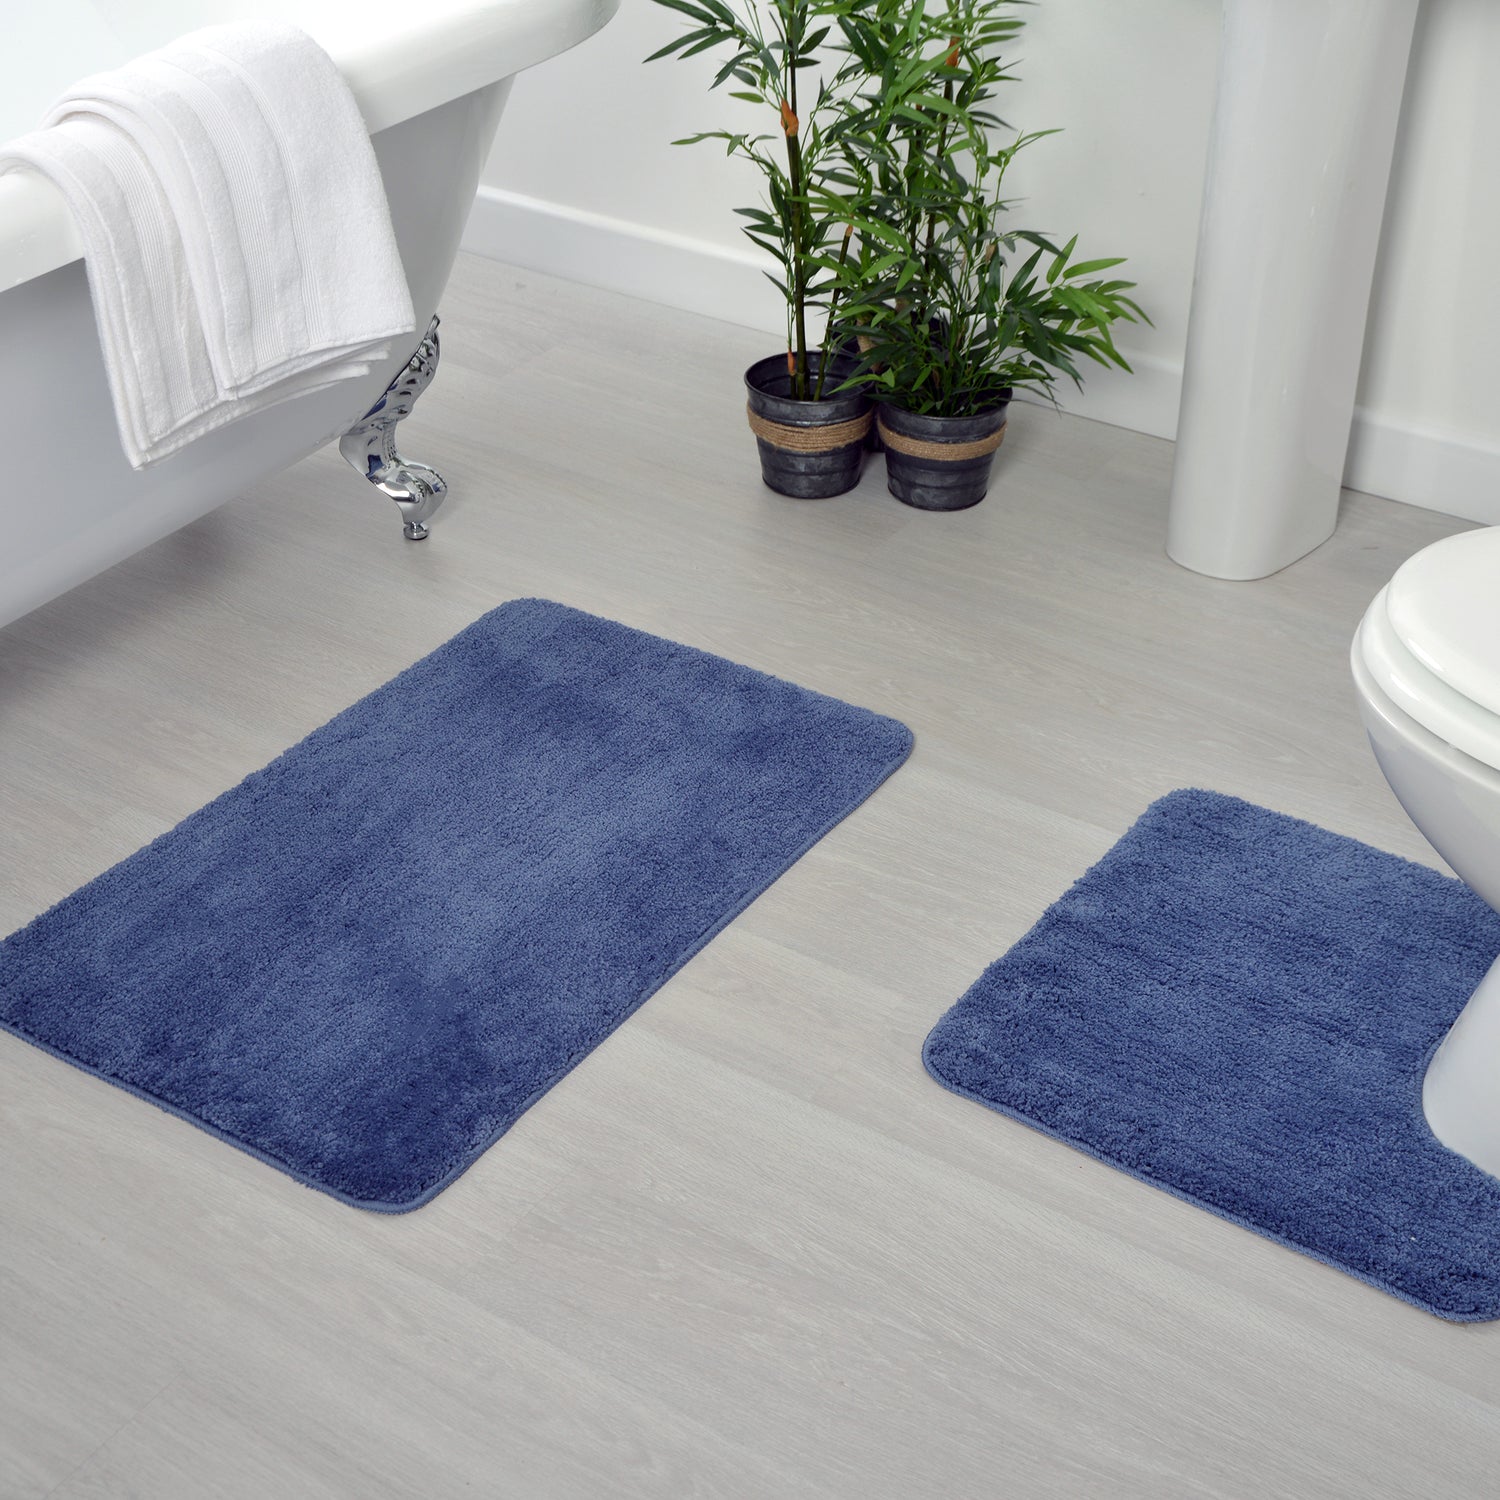 Deep Blue Bathroom Mat Set - Luxury Microfibre Bath Mat and Pedestal Set